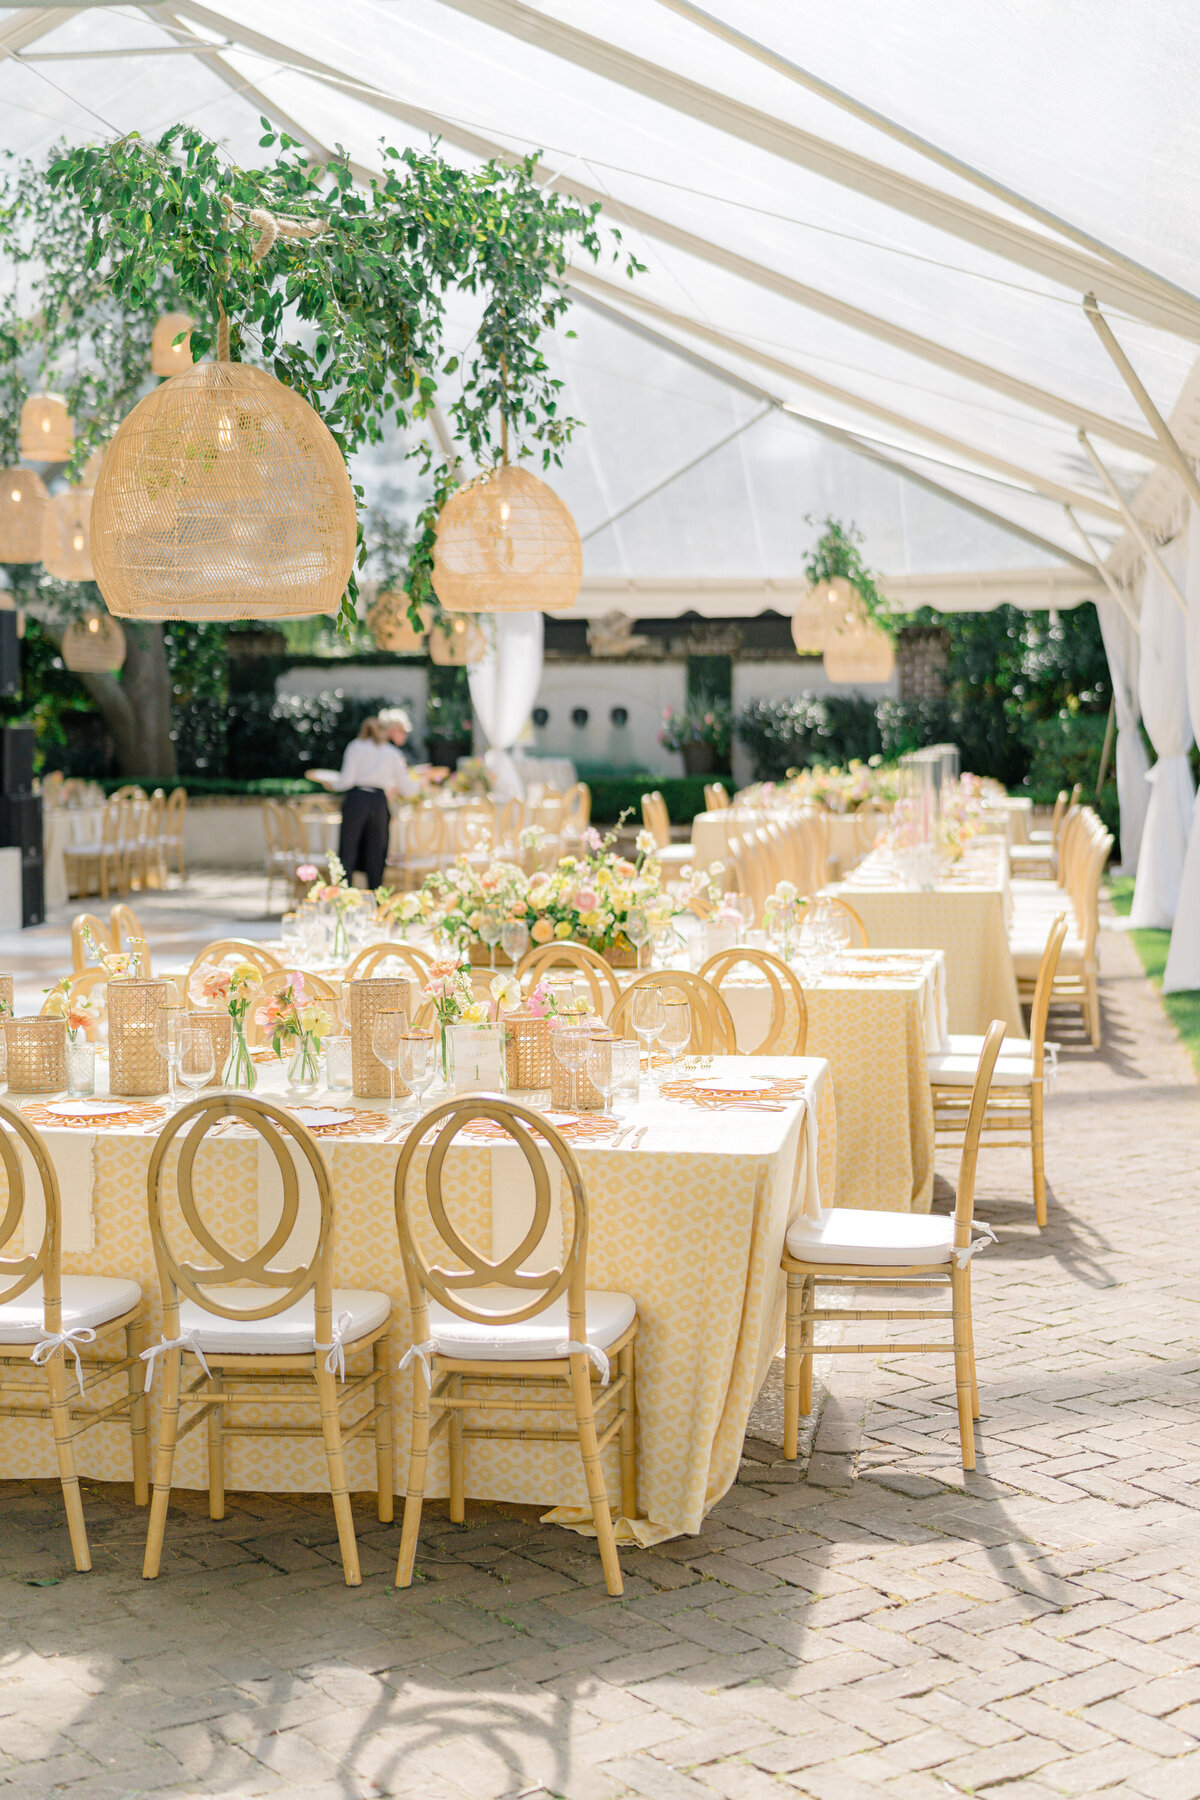 Pink and yellow wedding reception design with hanging greenery and lighting. Charleston spring wedding design.